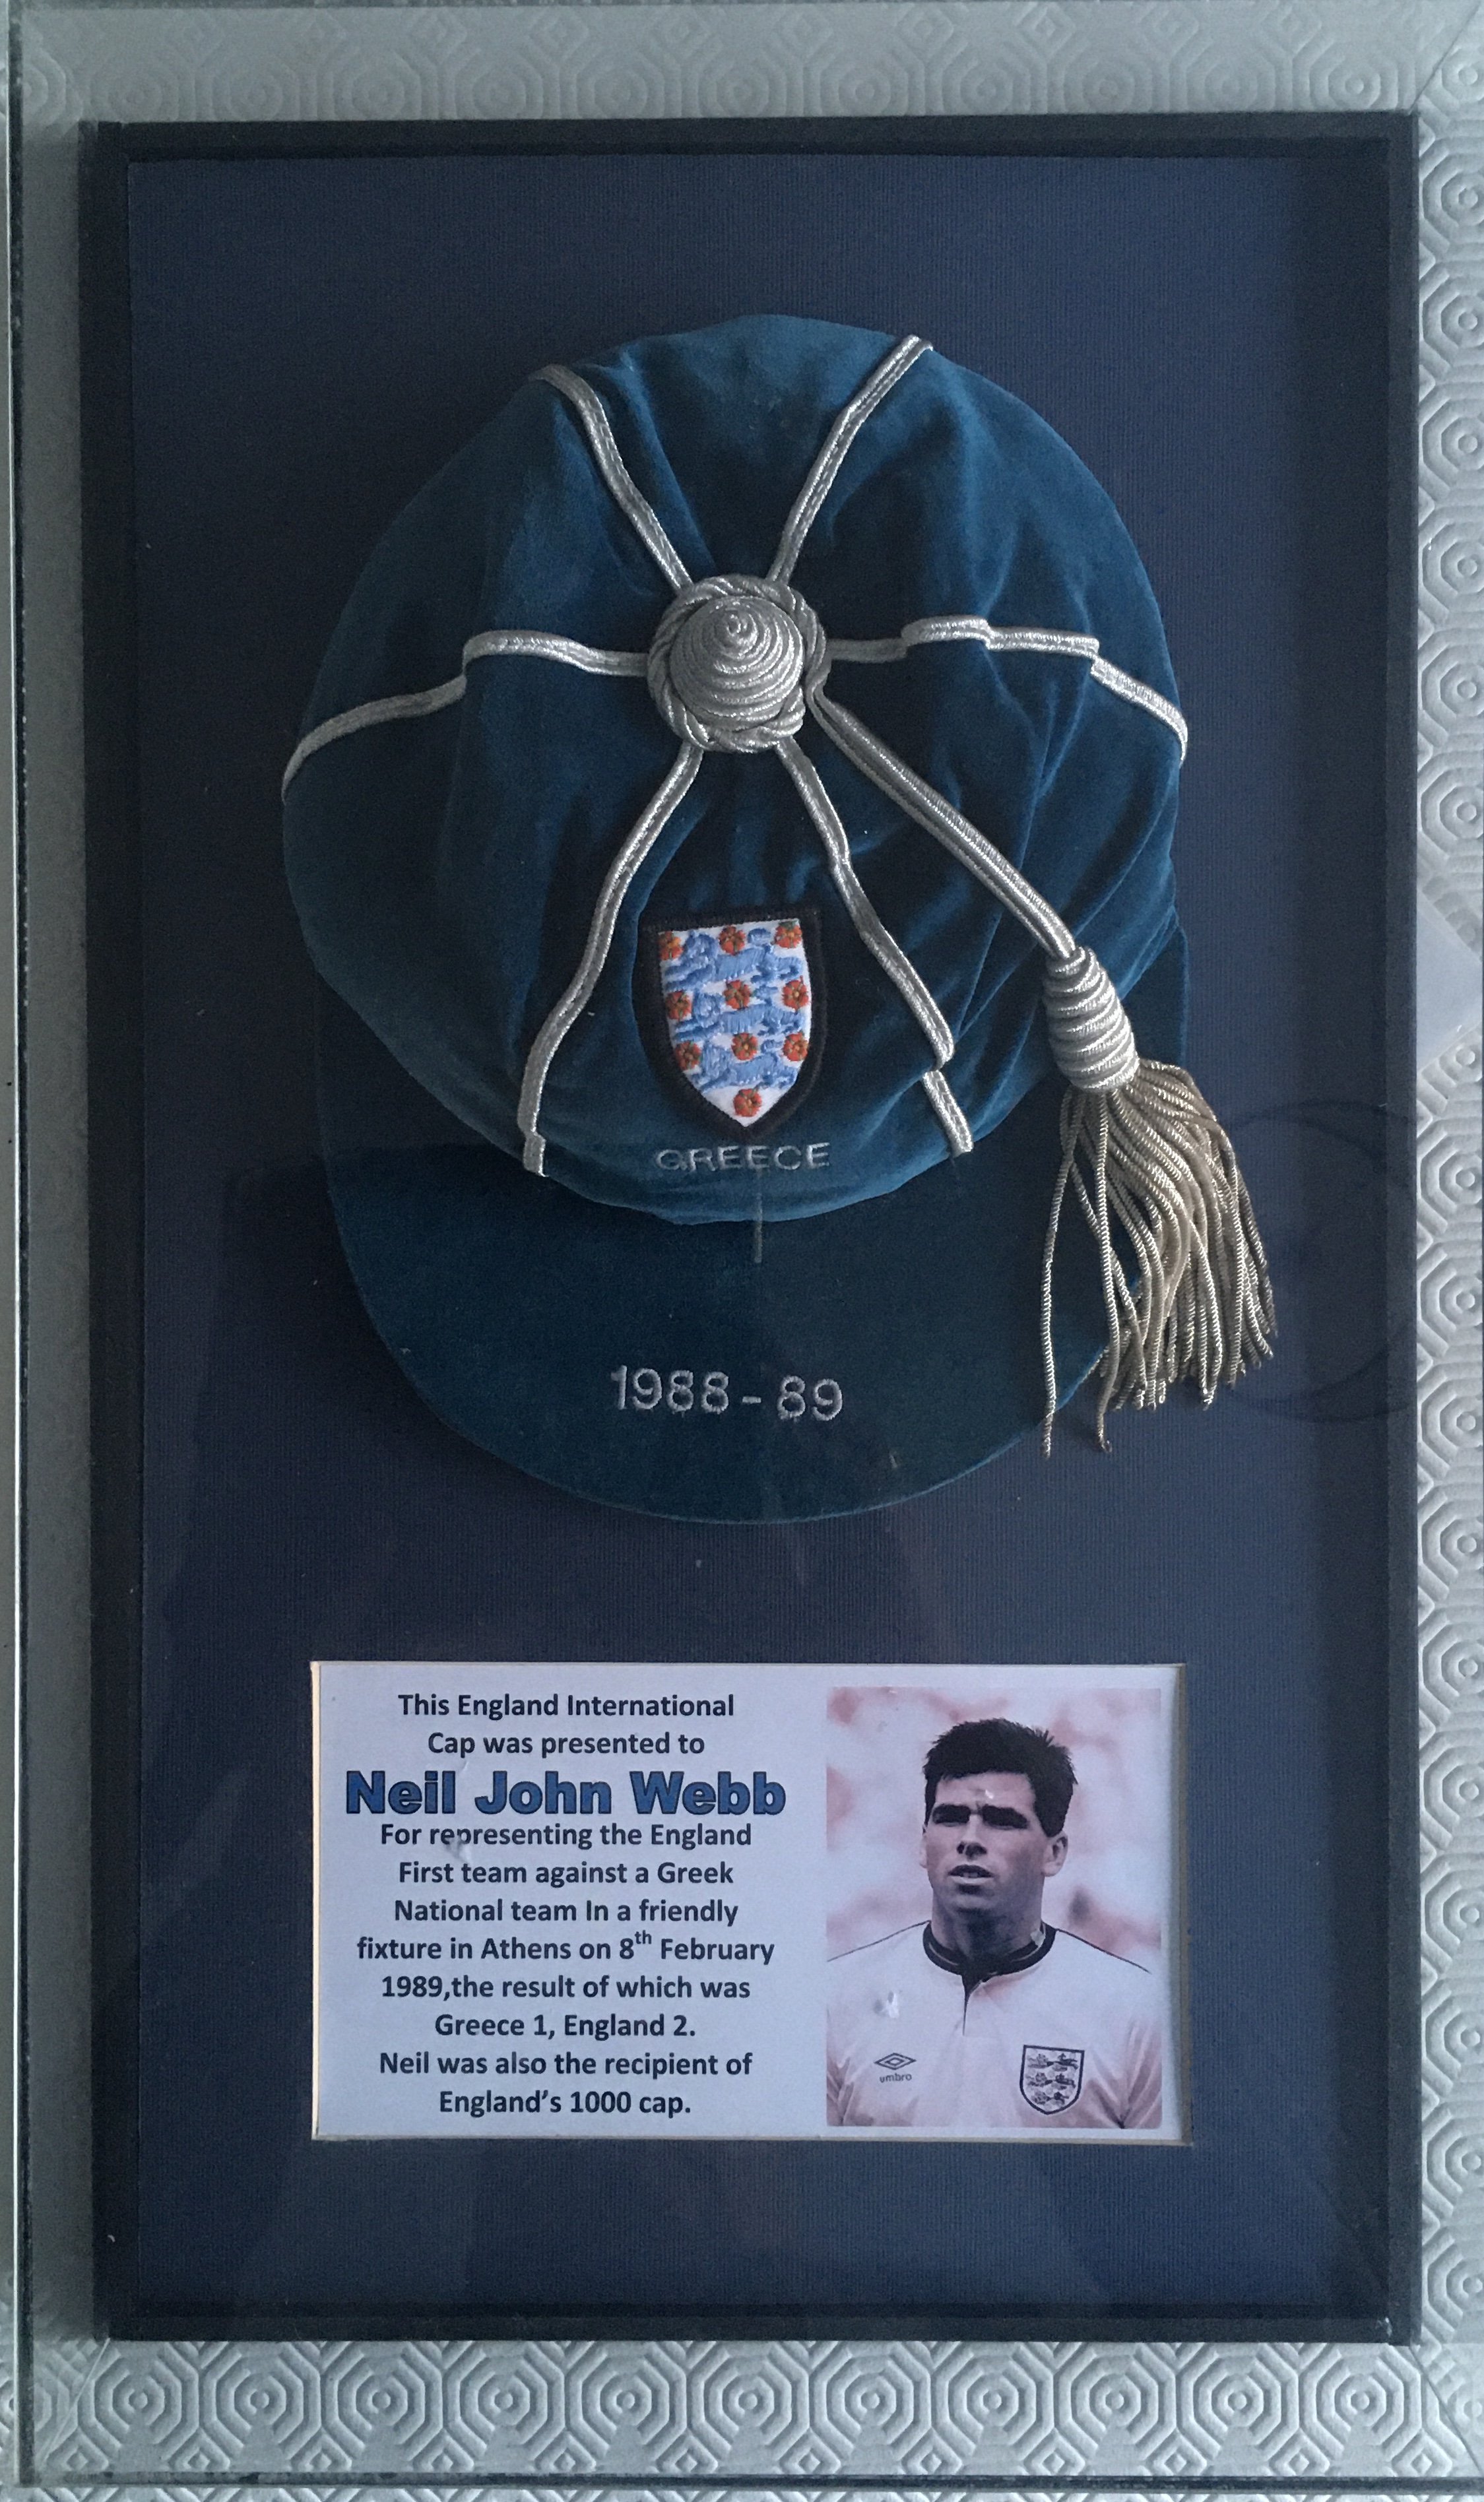 Neil Webb 1989 England International Football Cap: - Image 2 of 2